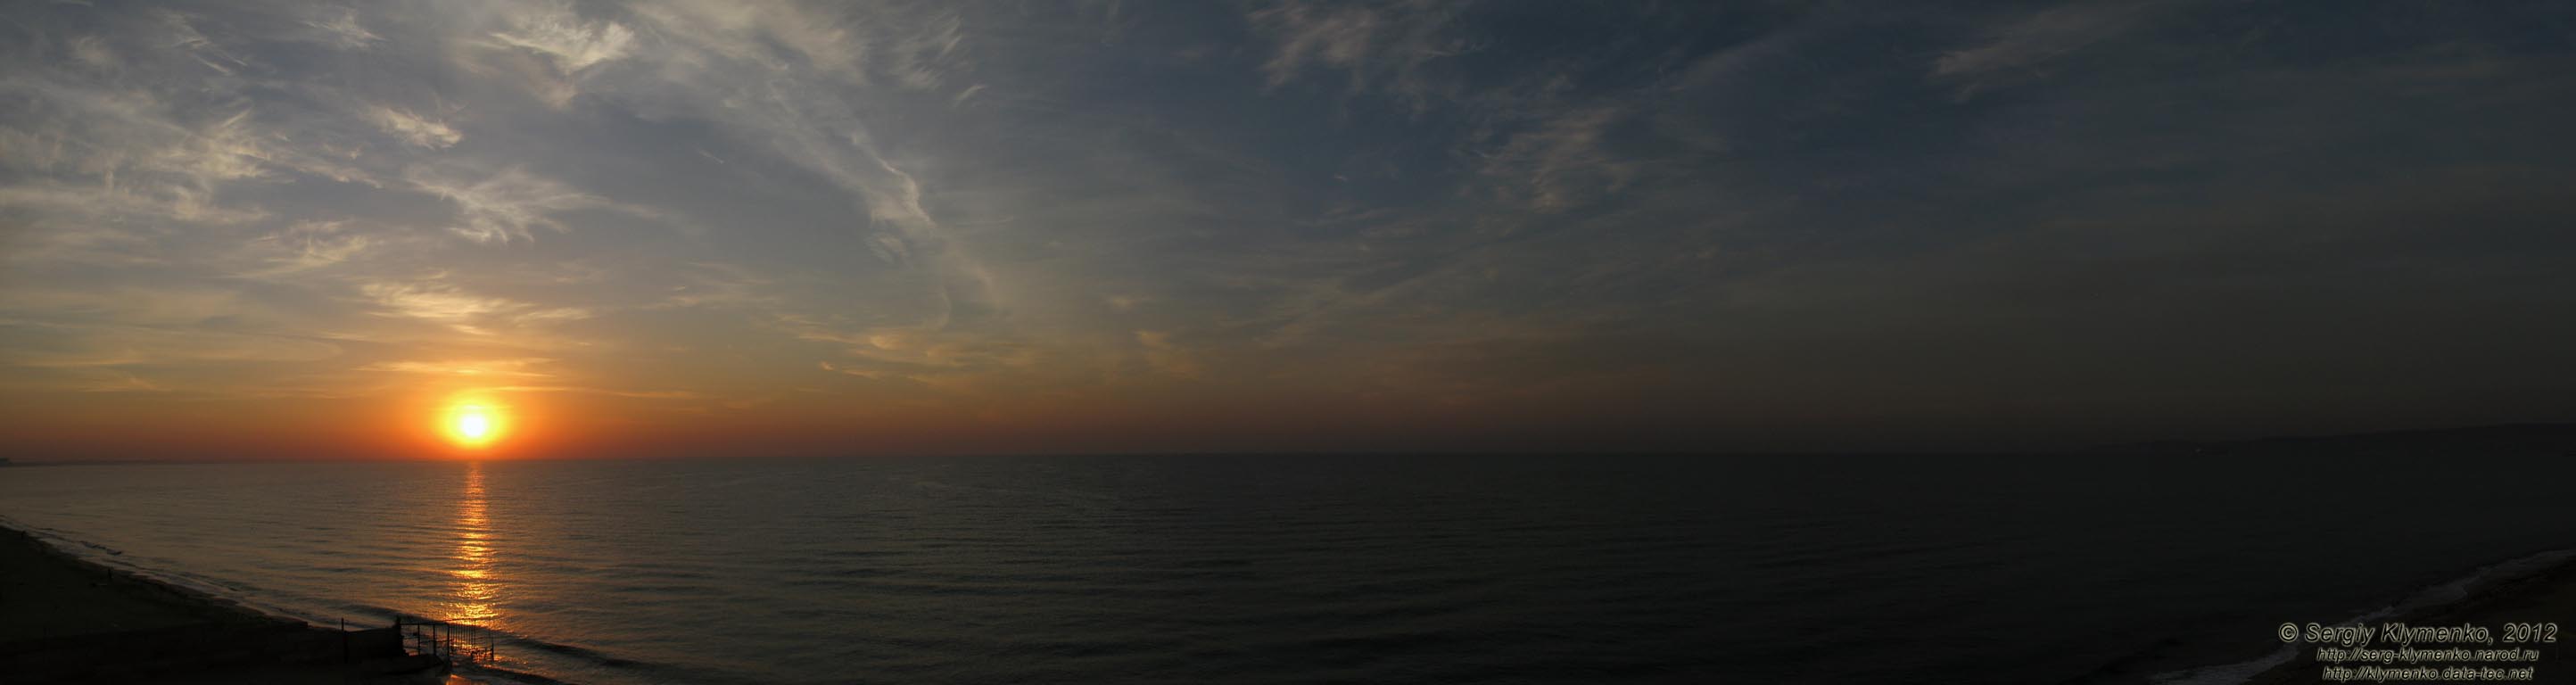 Крым, Феодосия. Фото. Восход солнца над Феодосийским заливом. Панорама ~150°.